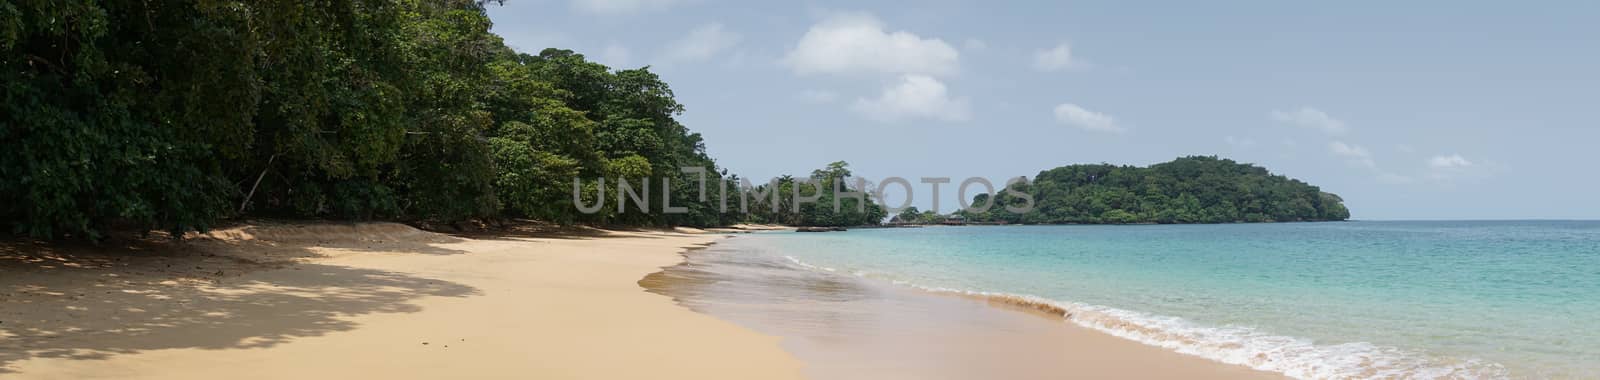 Praia Coco, Sao Tome and Principe, Africa by alfotokunst